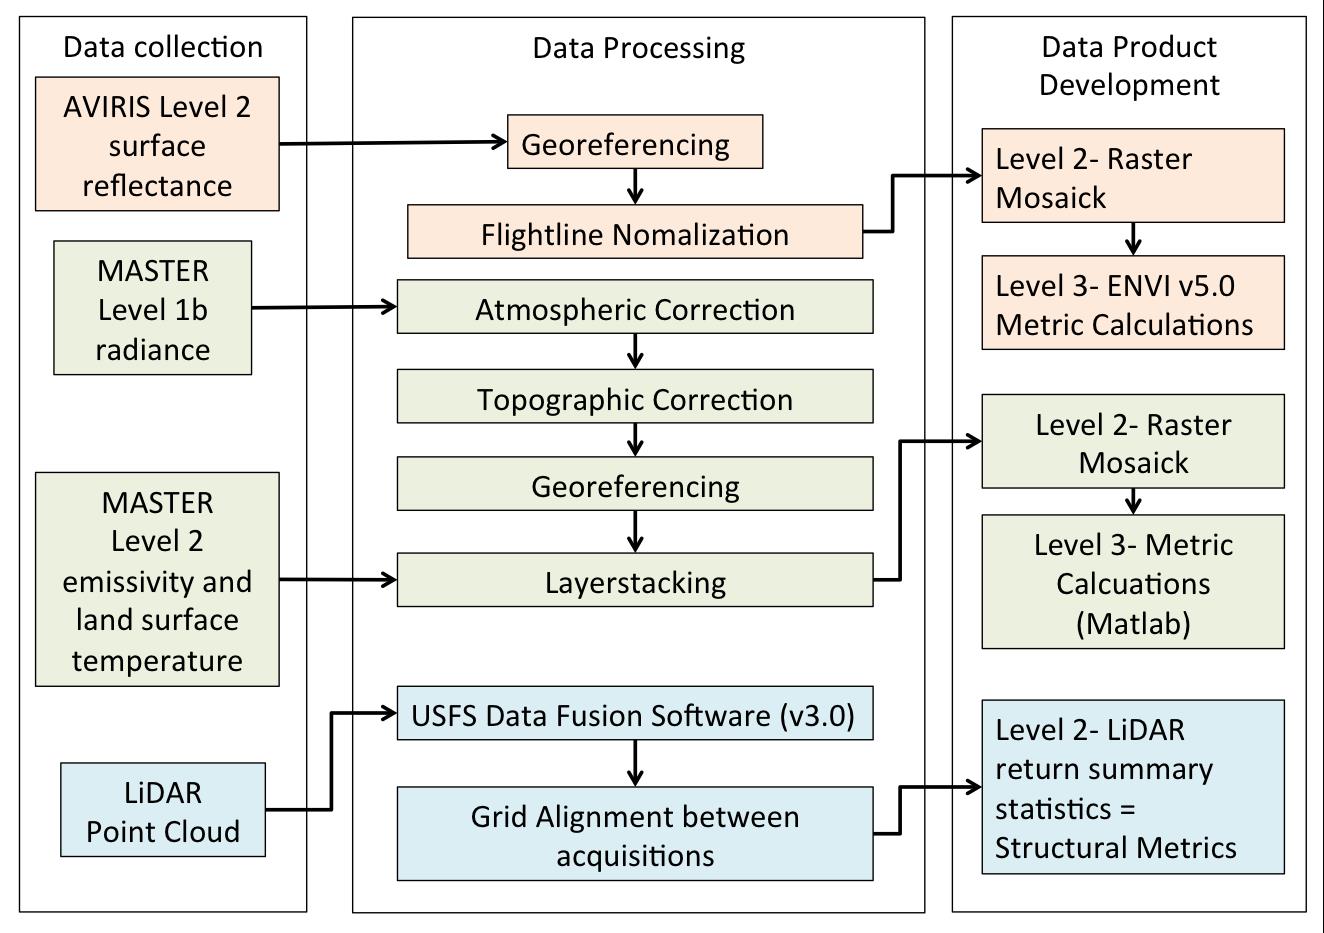 Figure 4. Data process